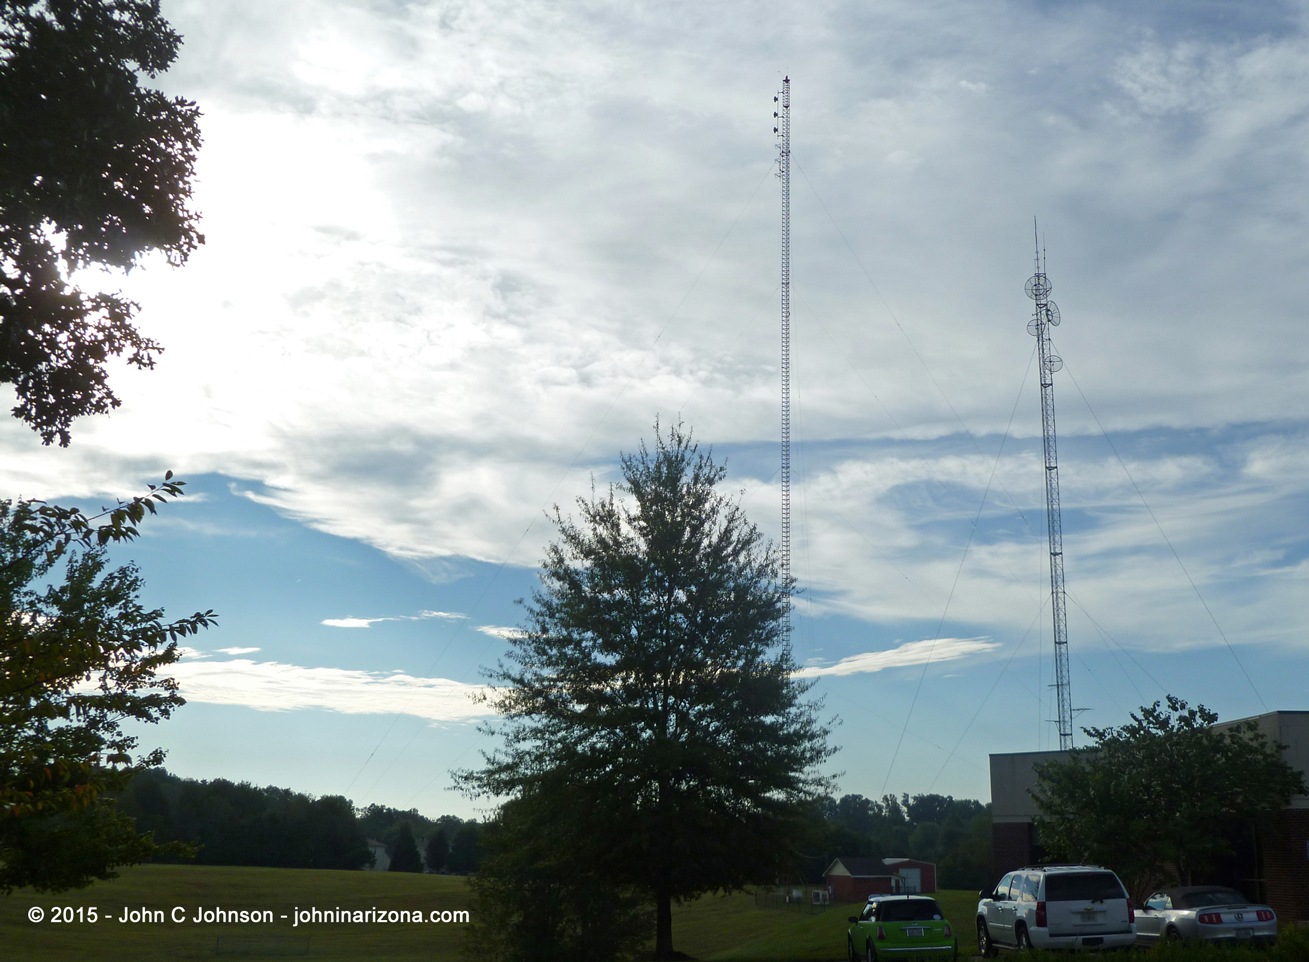 WKFN Radio 540 Clarksville, Tennessee